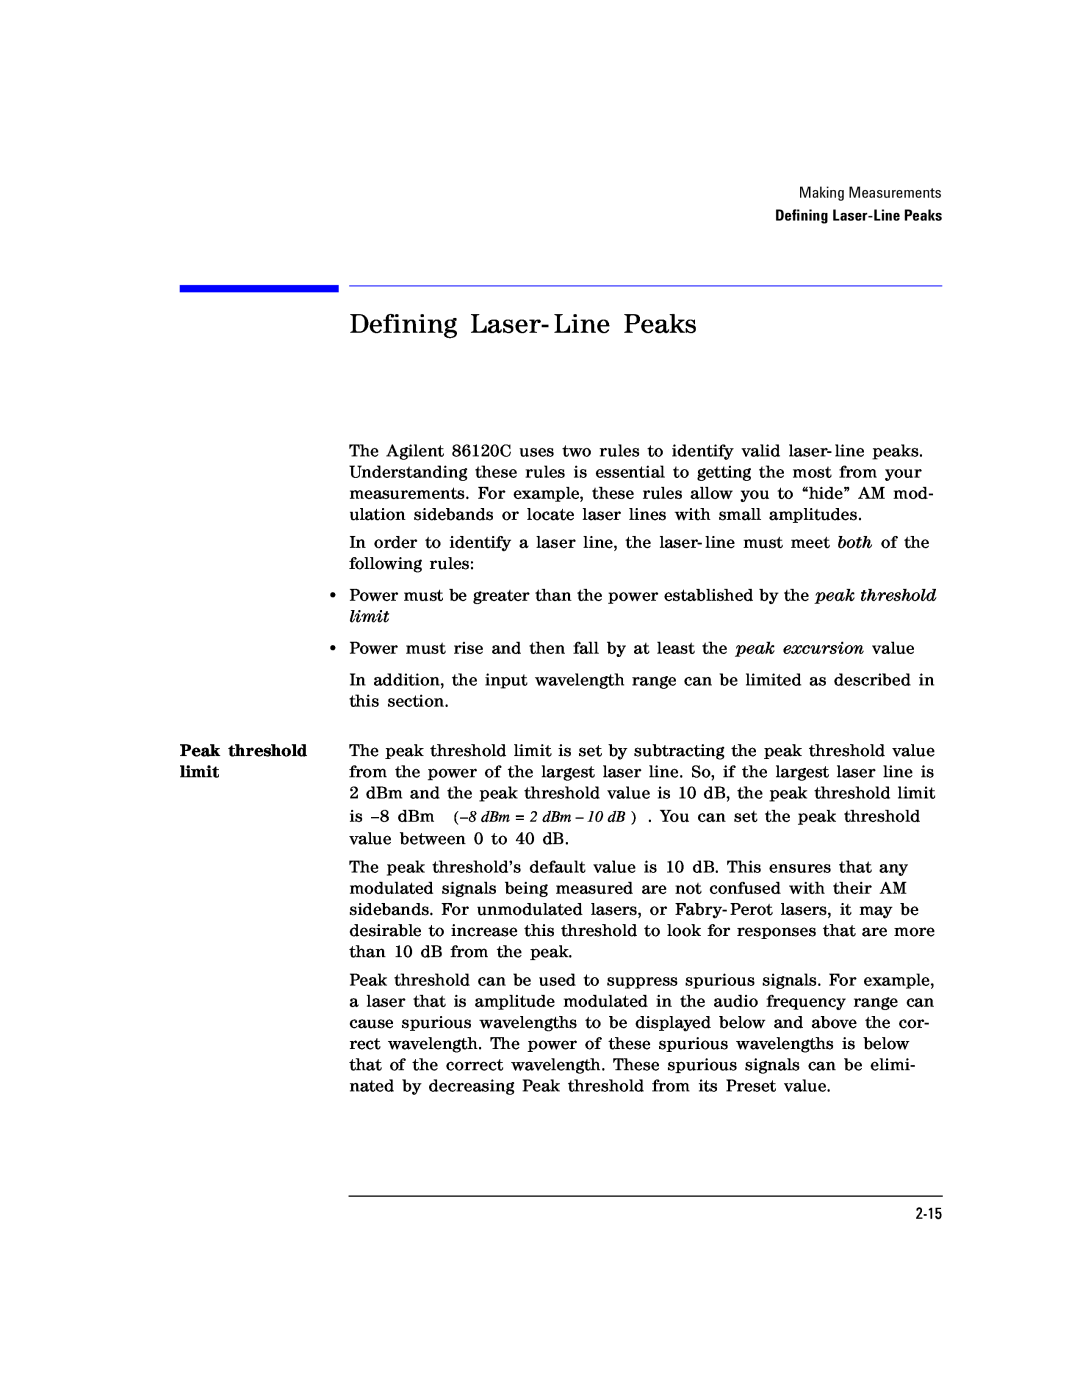 Agilent Technologies Agilent 86120C manual Defining Laser- Line Peaks 